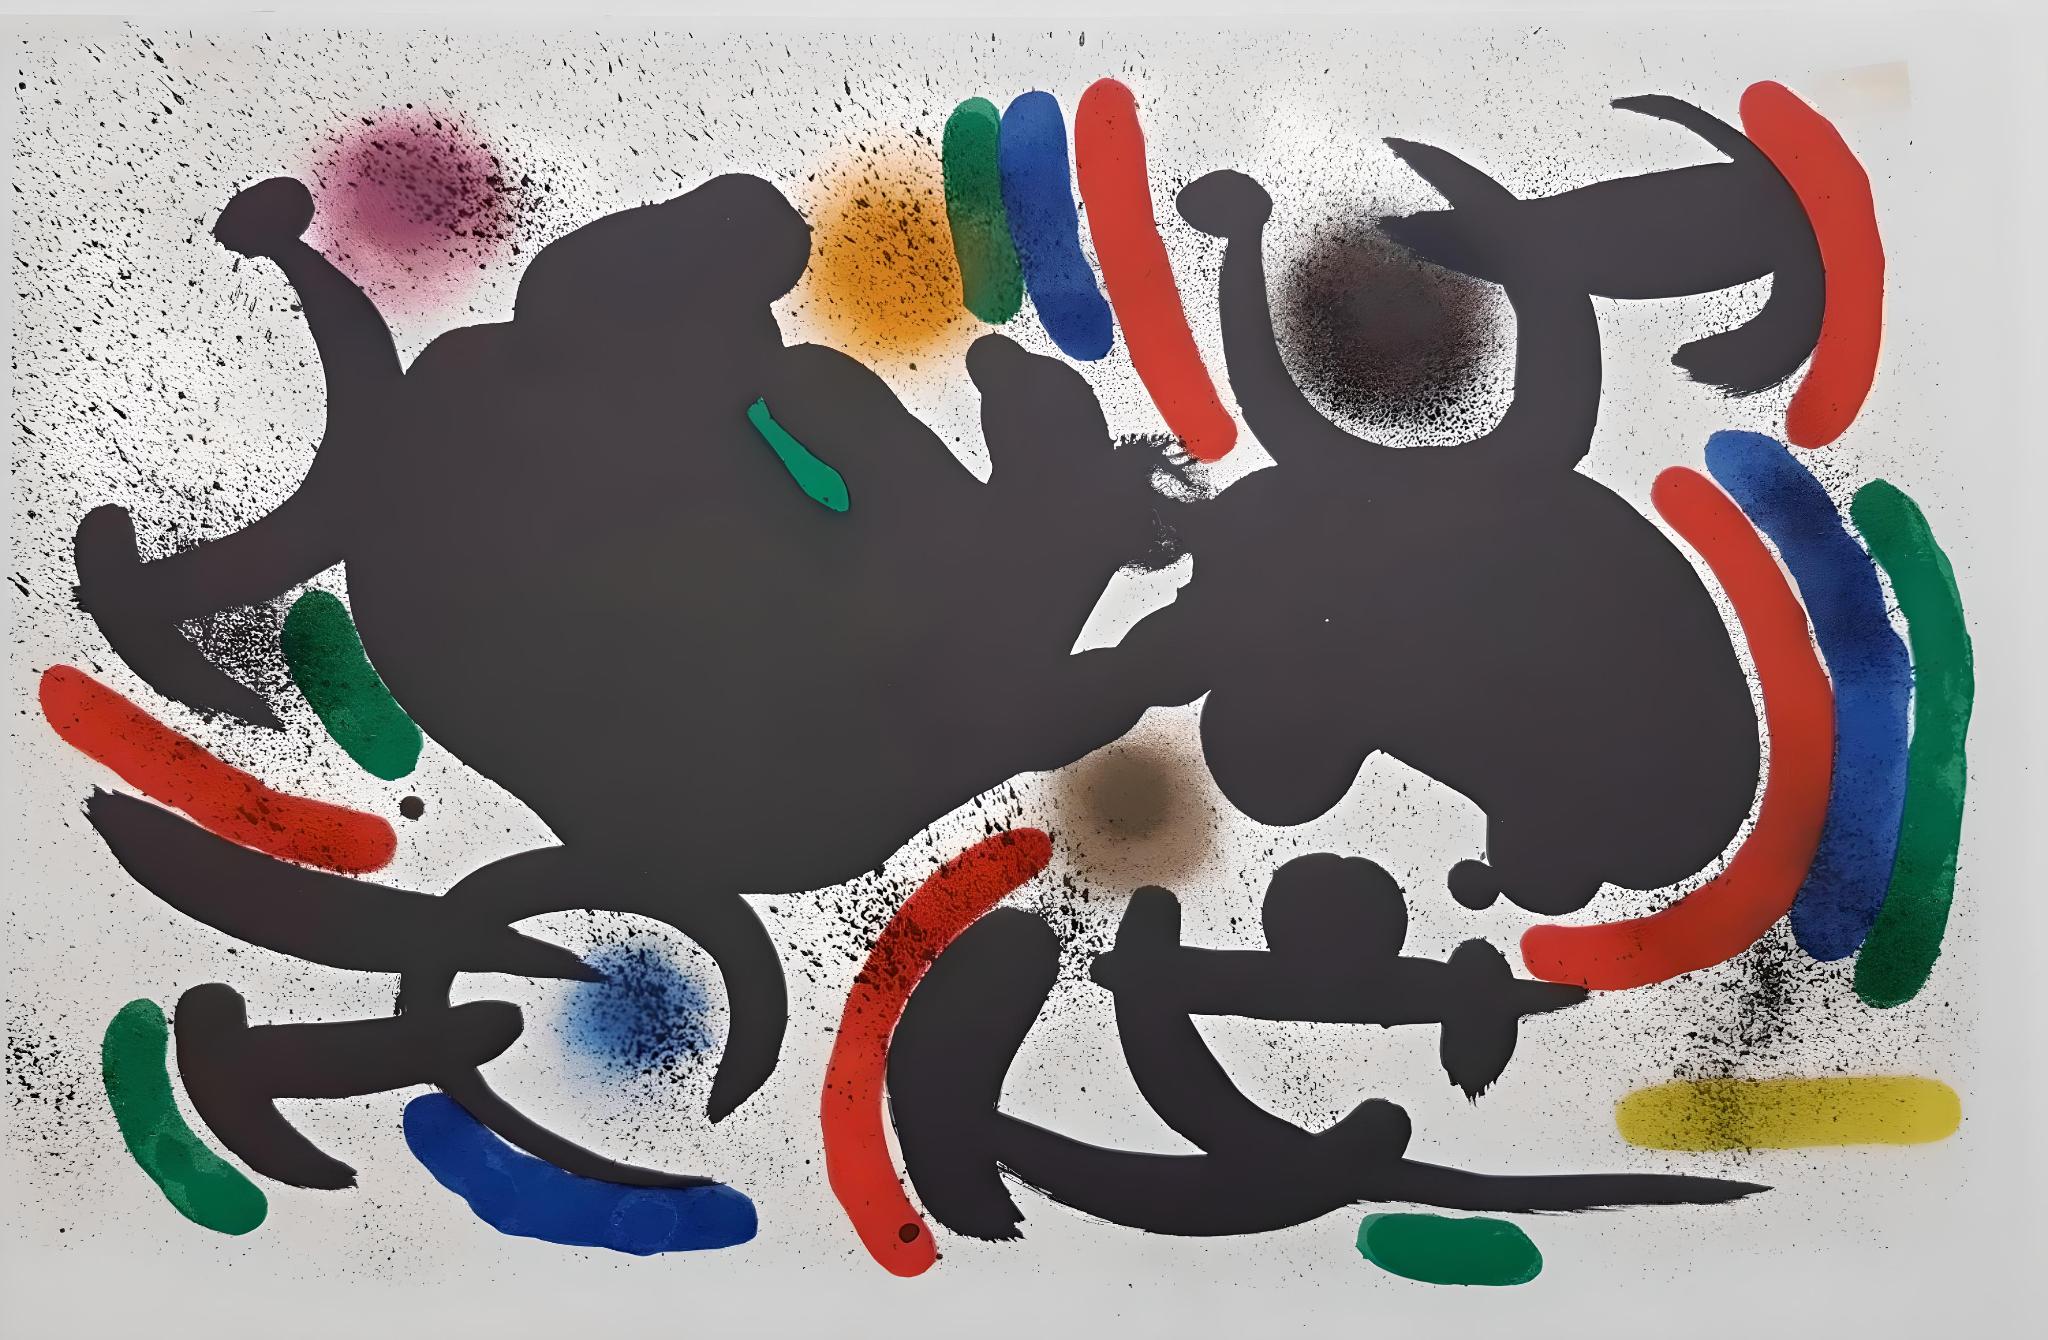 Joan Miró Figurative Print - Miro, Composition (Cramer 160; Mourlot 863), 1972 (after)